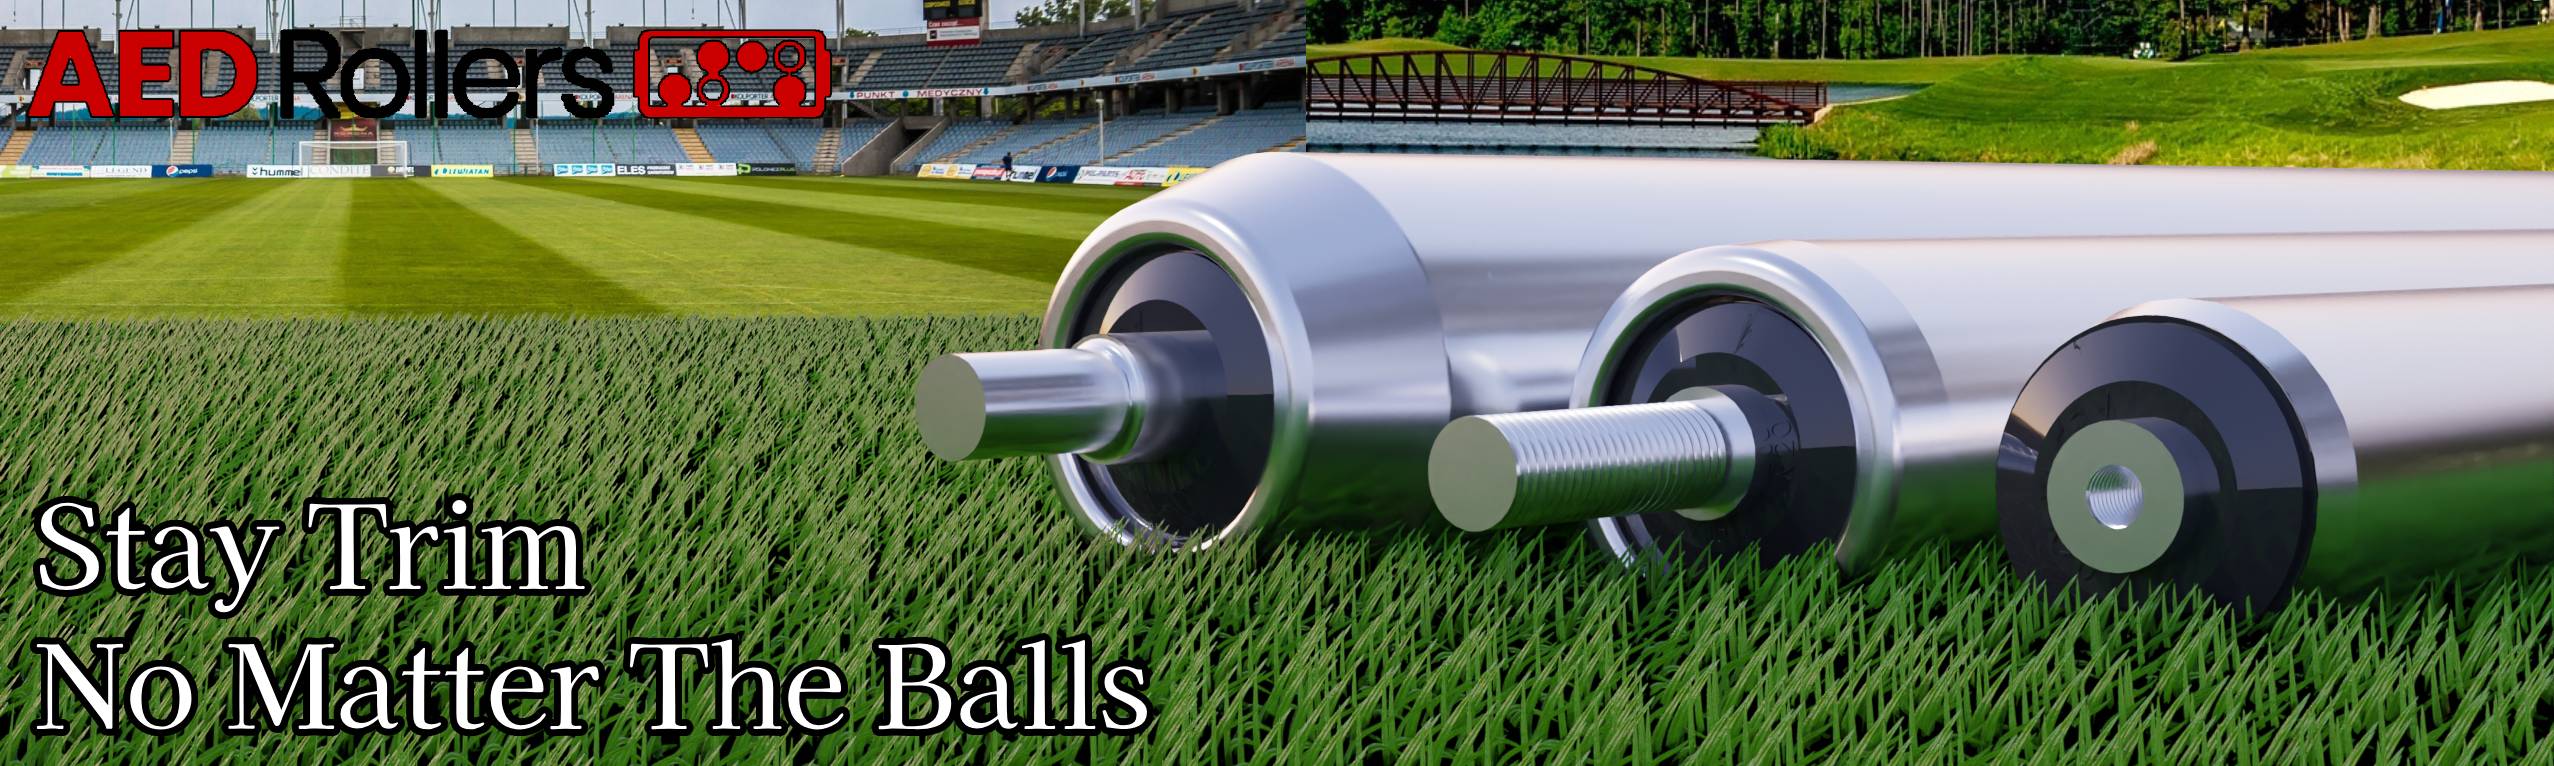 SportsField / Golf Greens & Hedge rollers